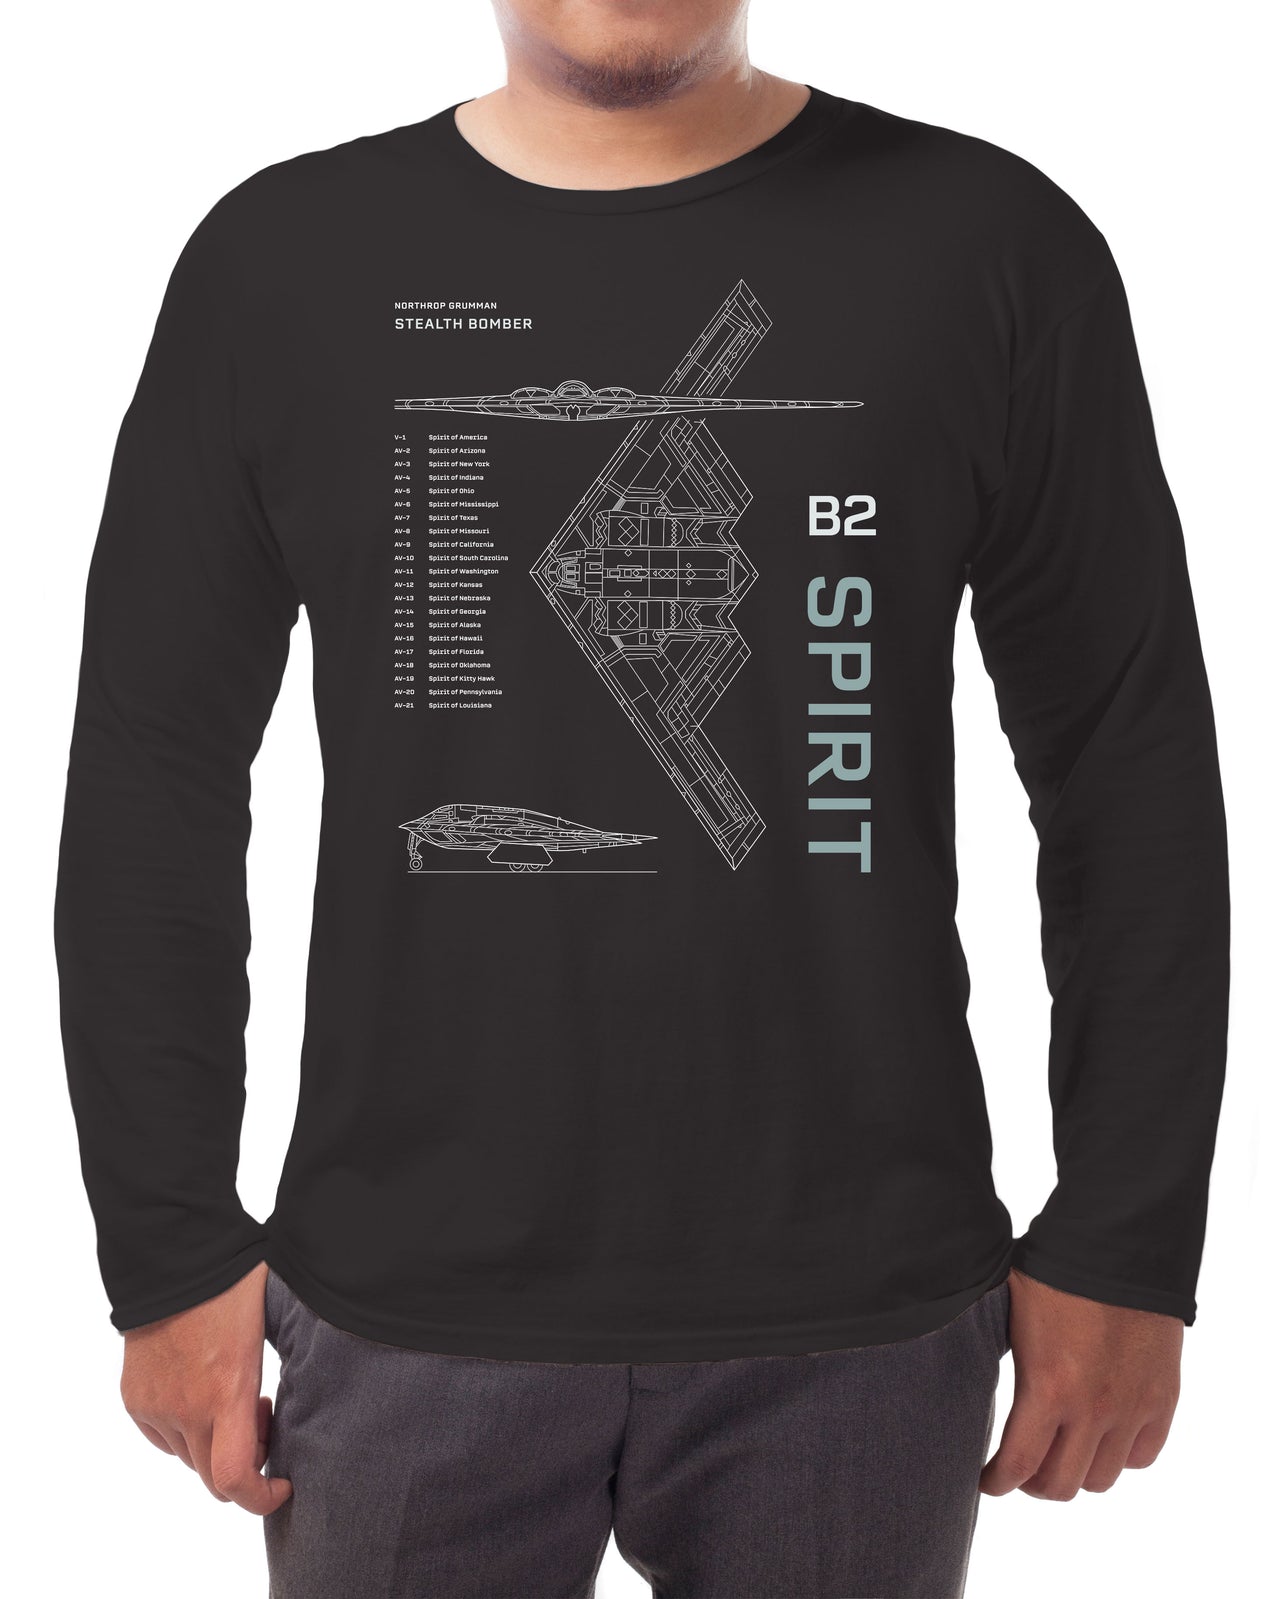 B-2 Spirit - Long-sleeve T-shirt